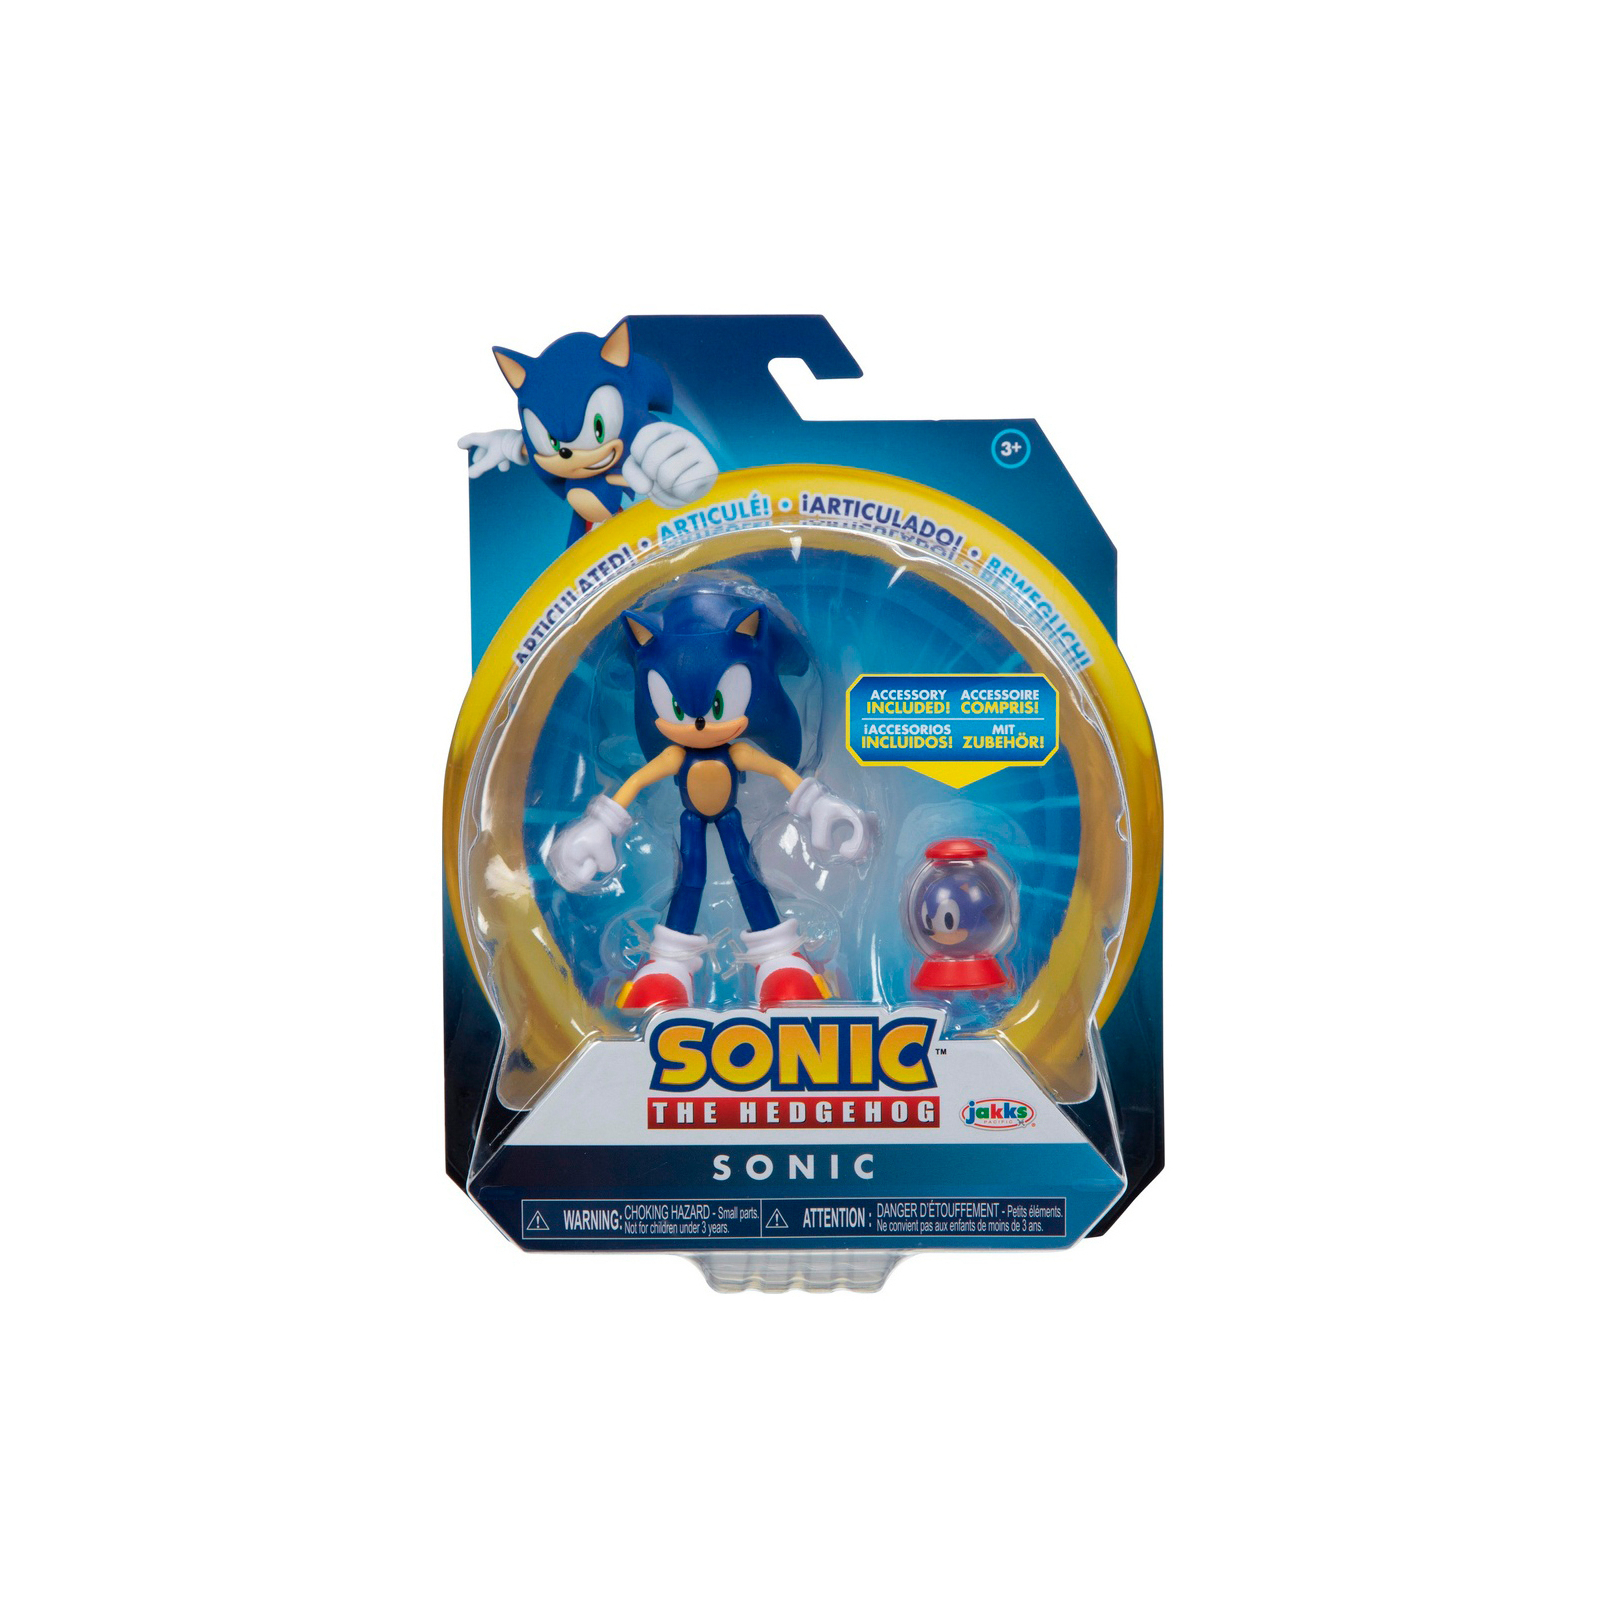 Фигурка Sonic the Hedgehog с артикуляцией – Модерн Соник 10 см (41678i-GEN) изображение 5